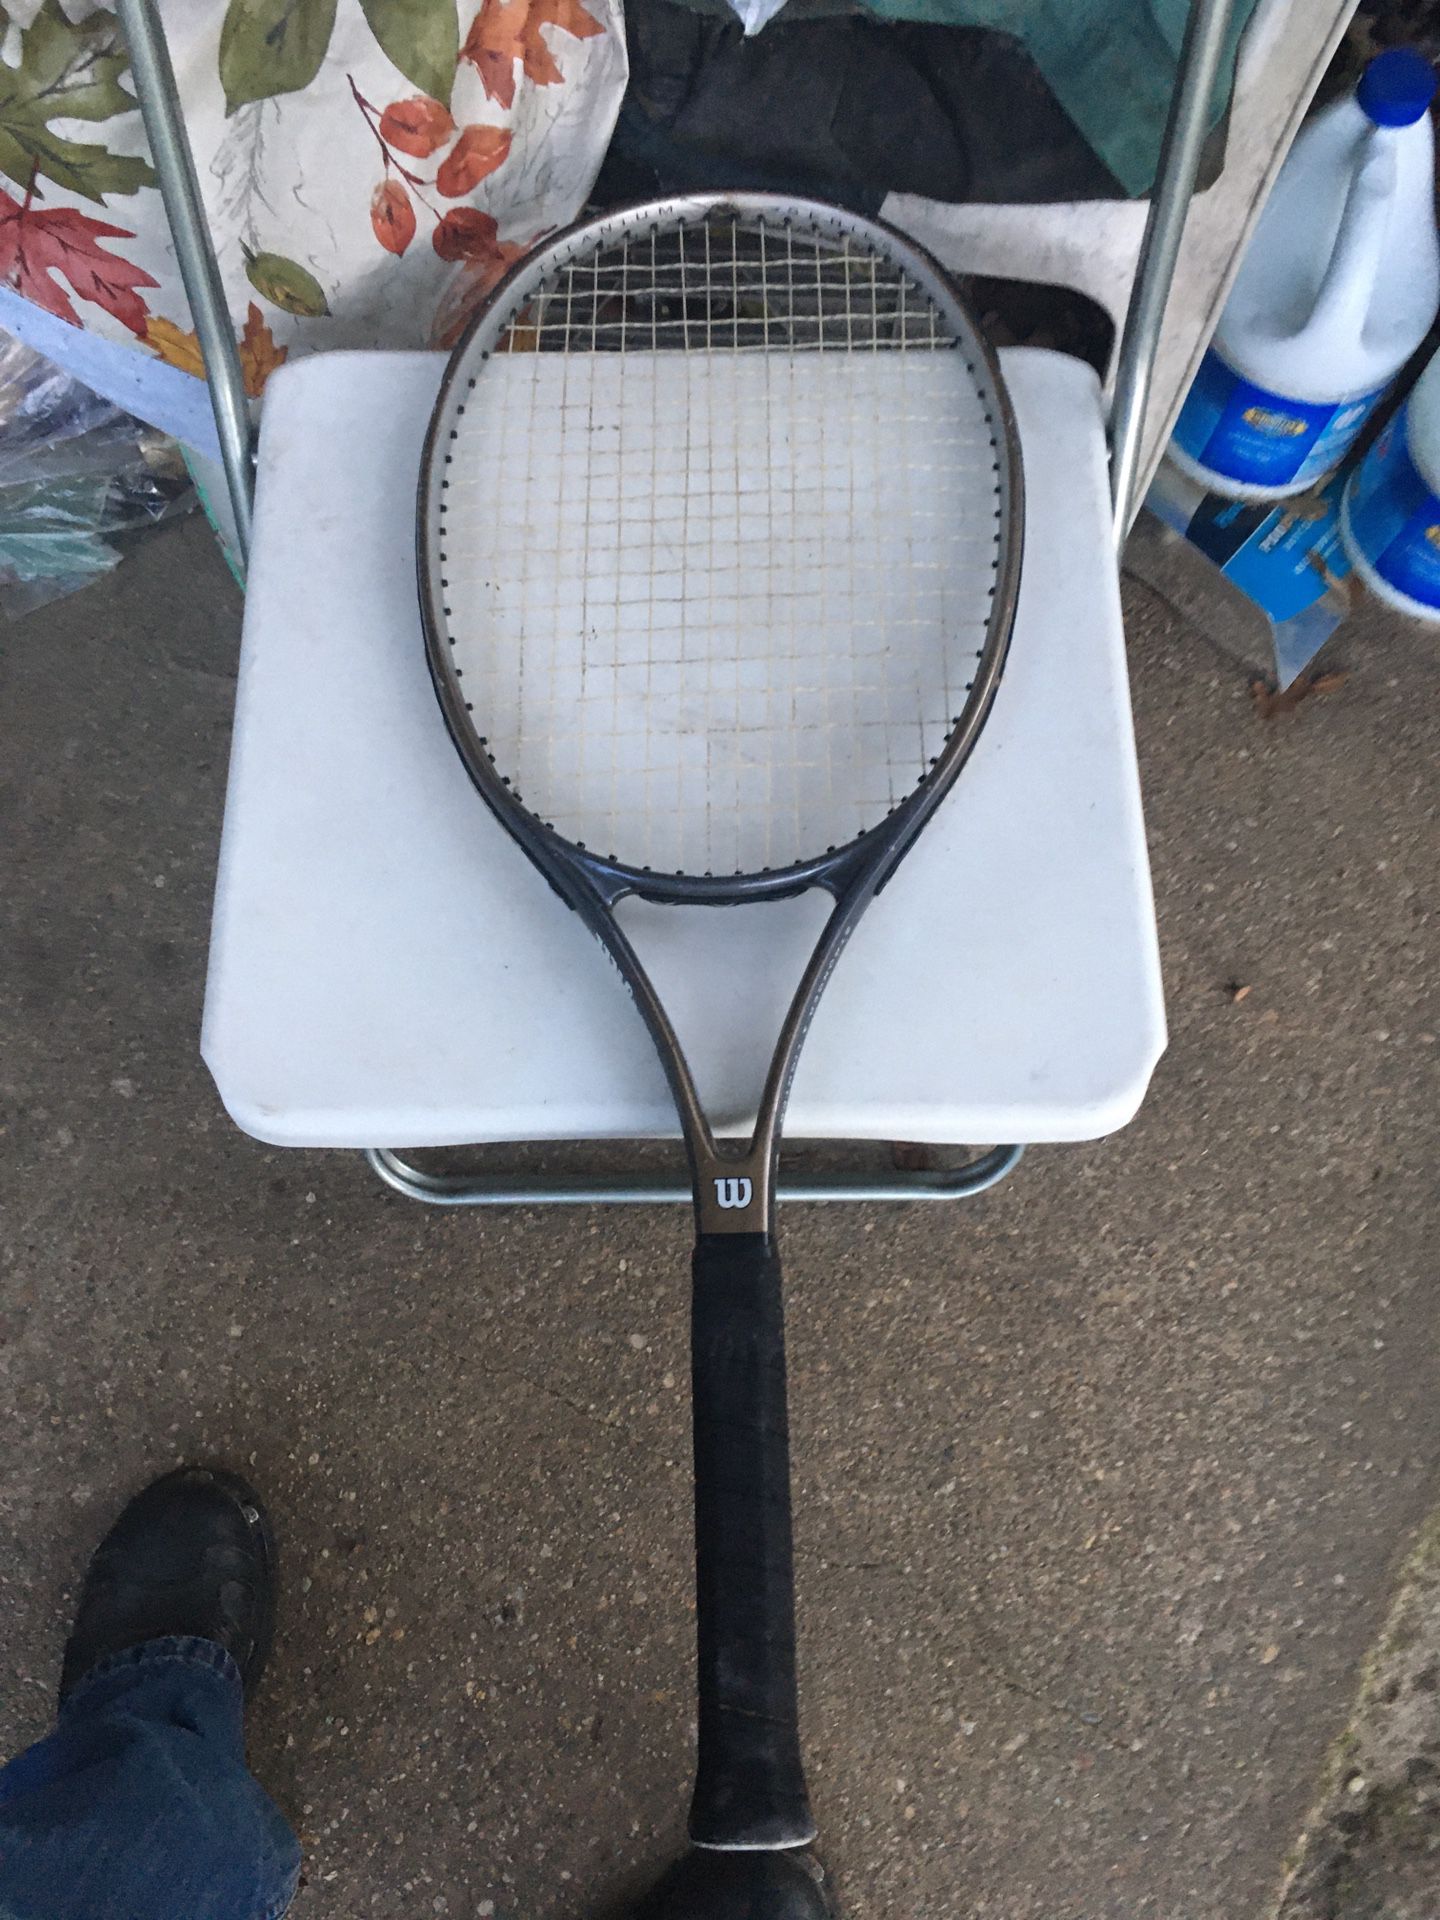 Nice carbine Wilson tennis racket only $20